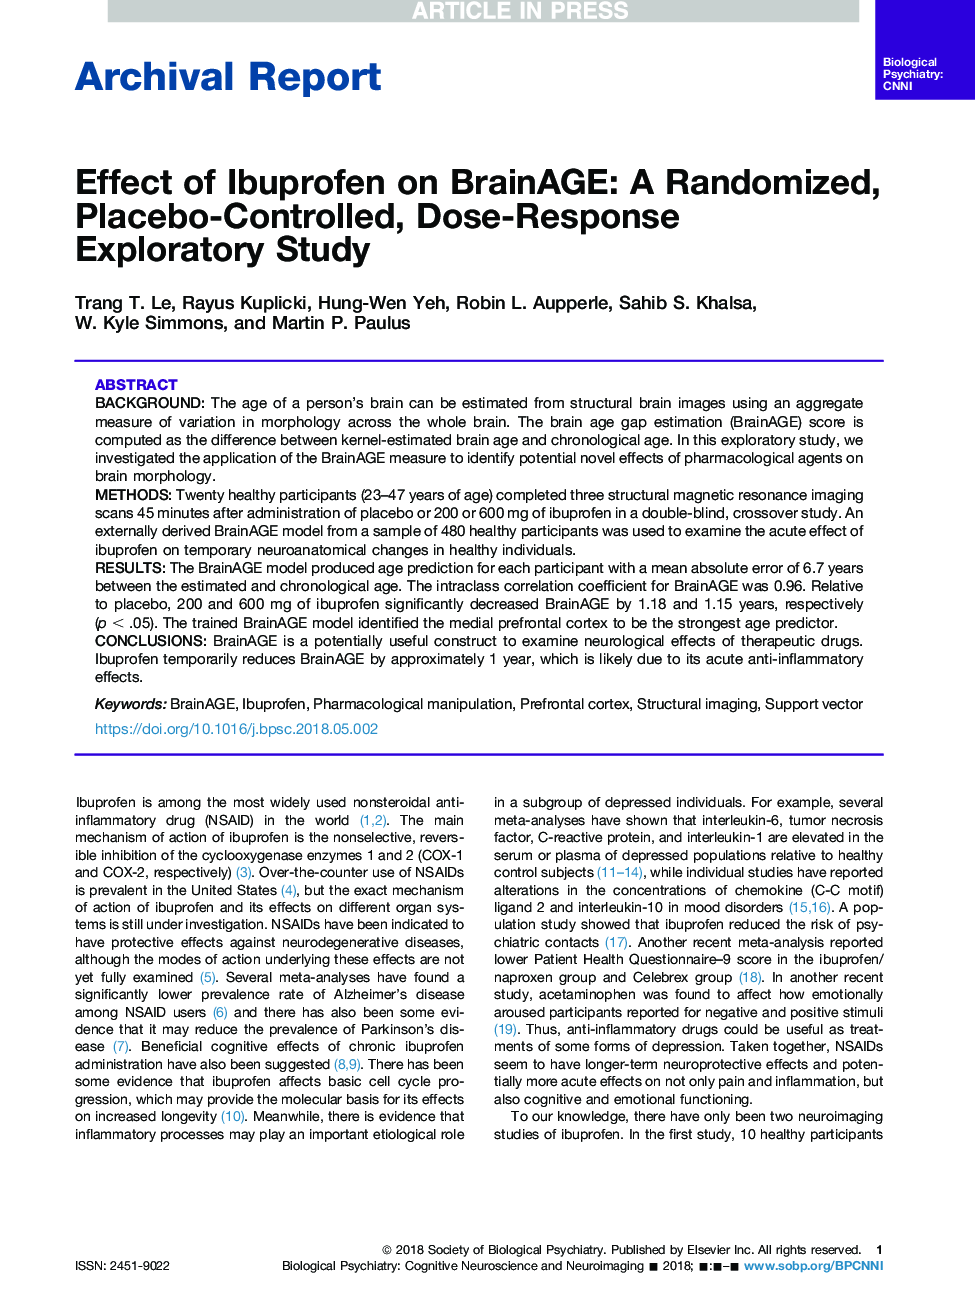 Effect of Ibuprofen on BrainAGE: A Randomized, Placebo-Controlled, Dose-Response ExploratoryÂ Study